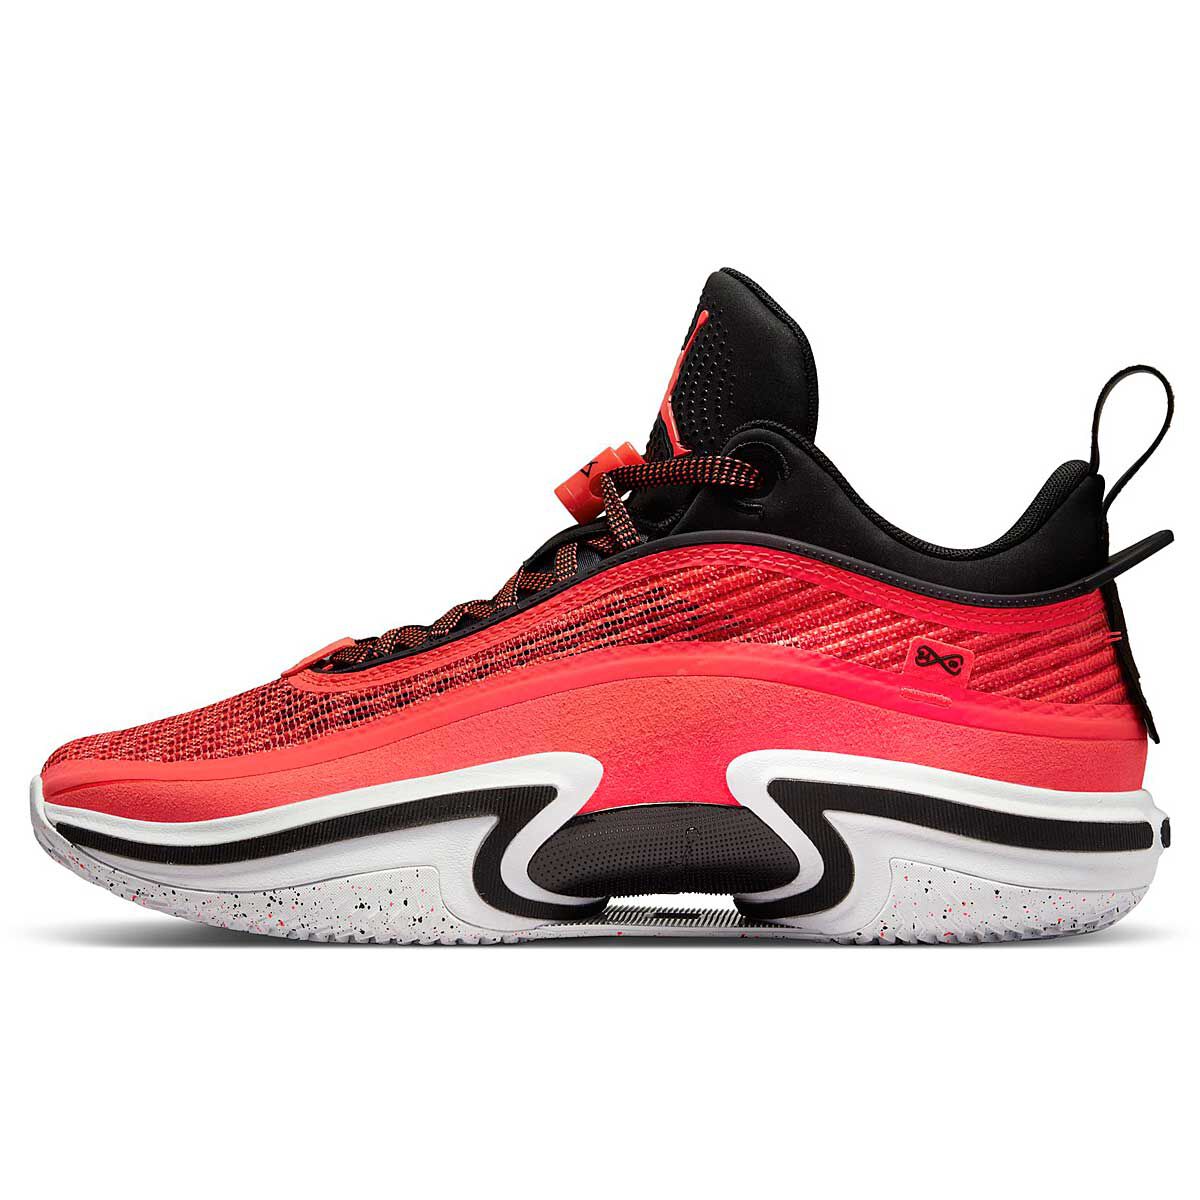 🏀 Get the AIR JORDAN 36 LOW basketball shoe - infrared 23 | KICKZ